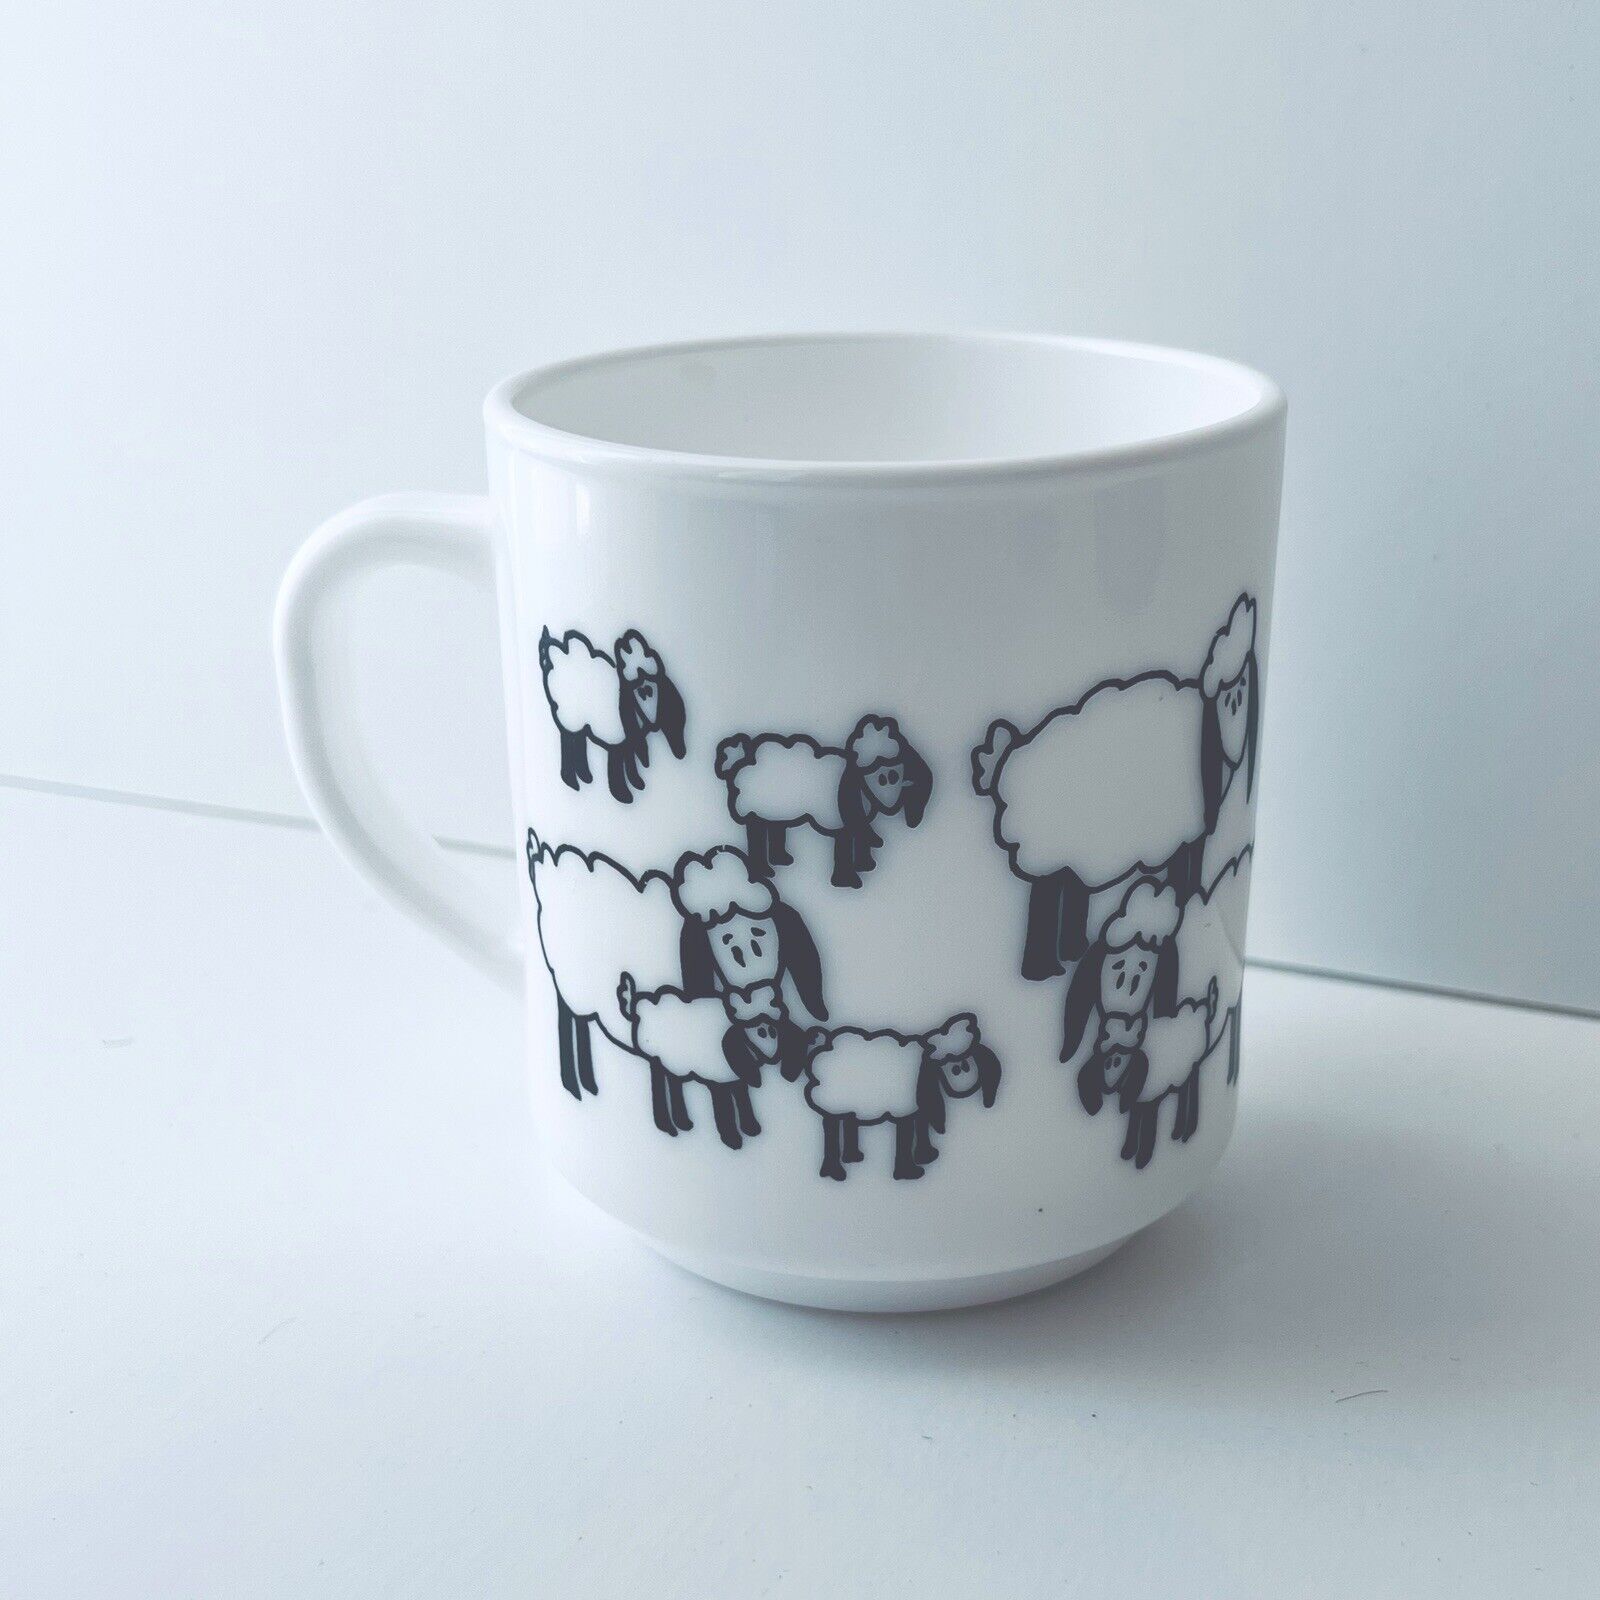 VTG Milk Glass Coffee Mug ARCOPAL France White Cup Cartoon Sheep 8oz EUC